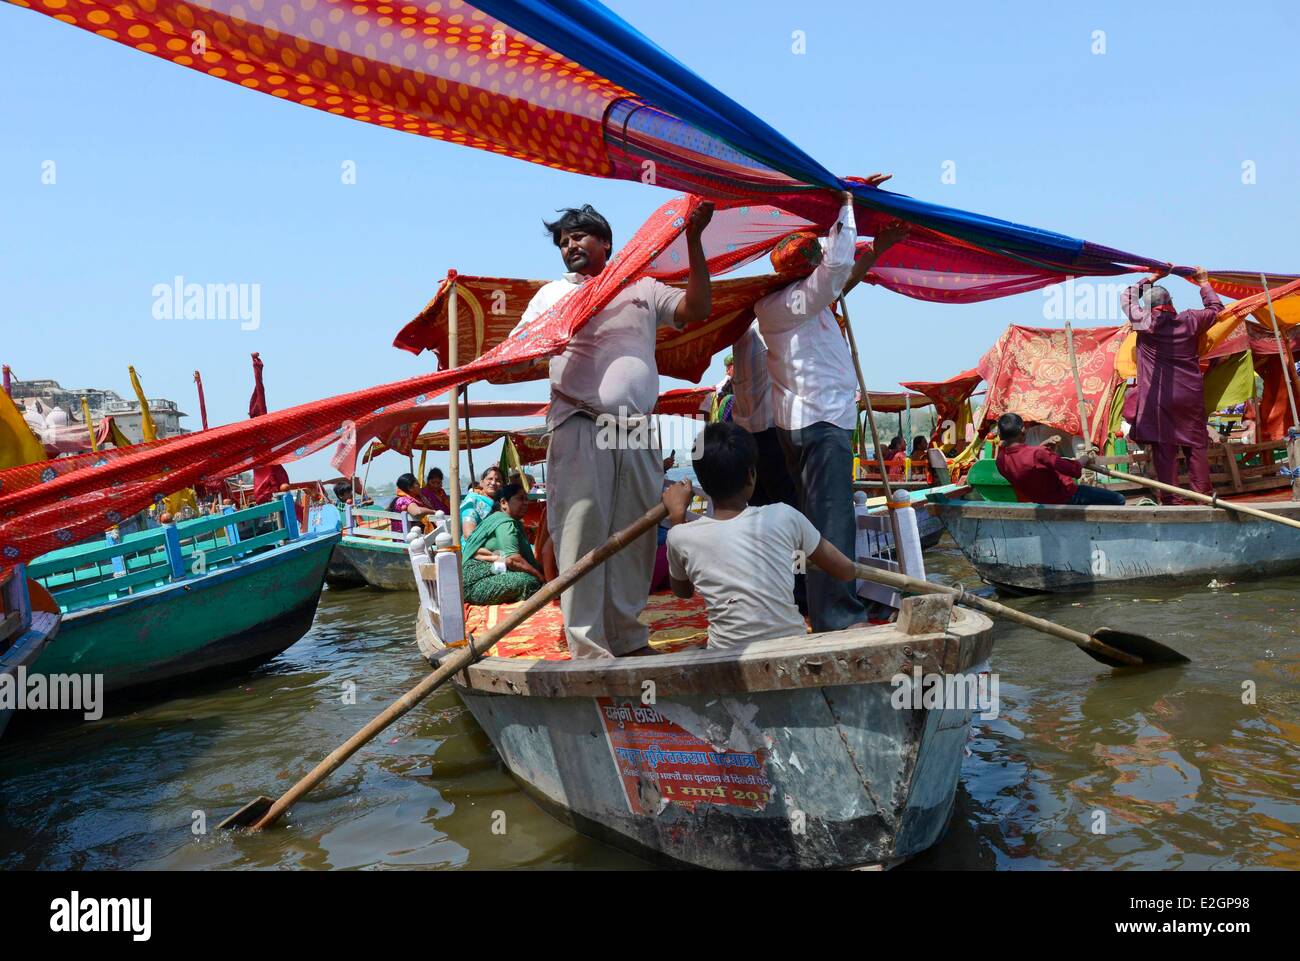 India Uttar Pradesh State Mathura people tie saris together across river during Holi festival celebrations Stock Photo